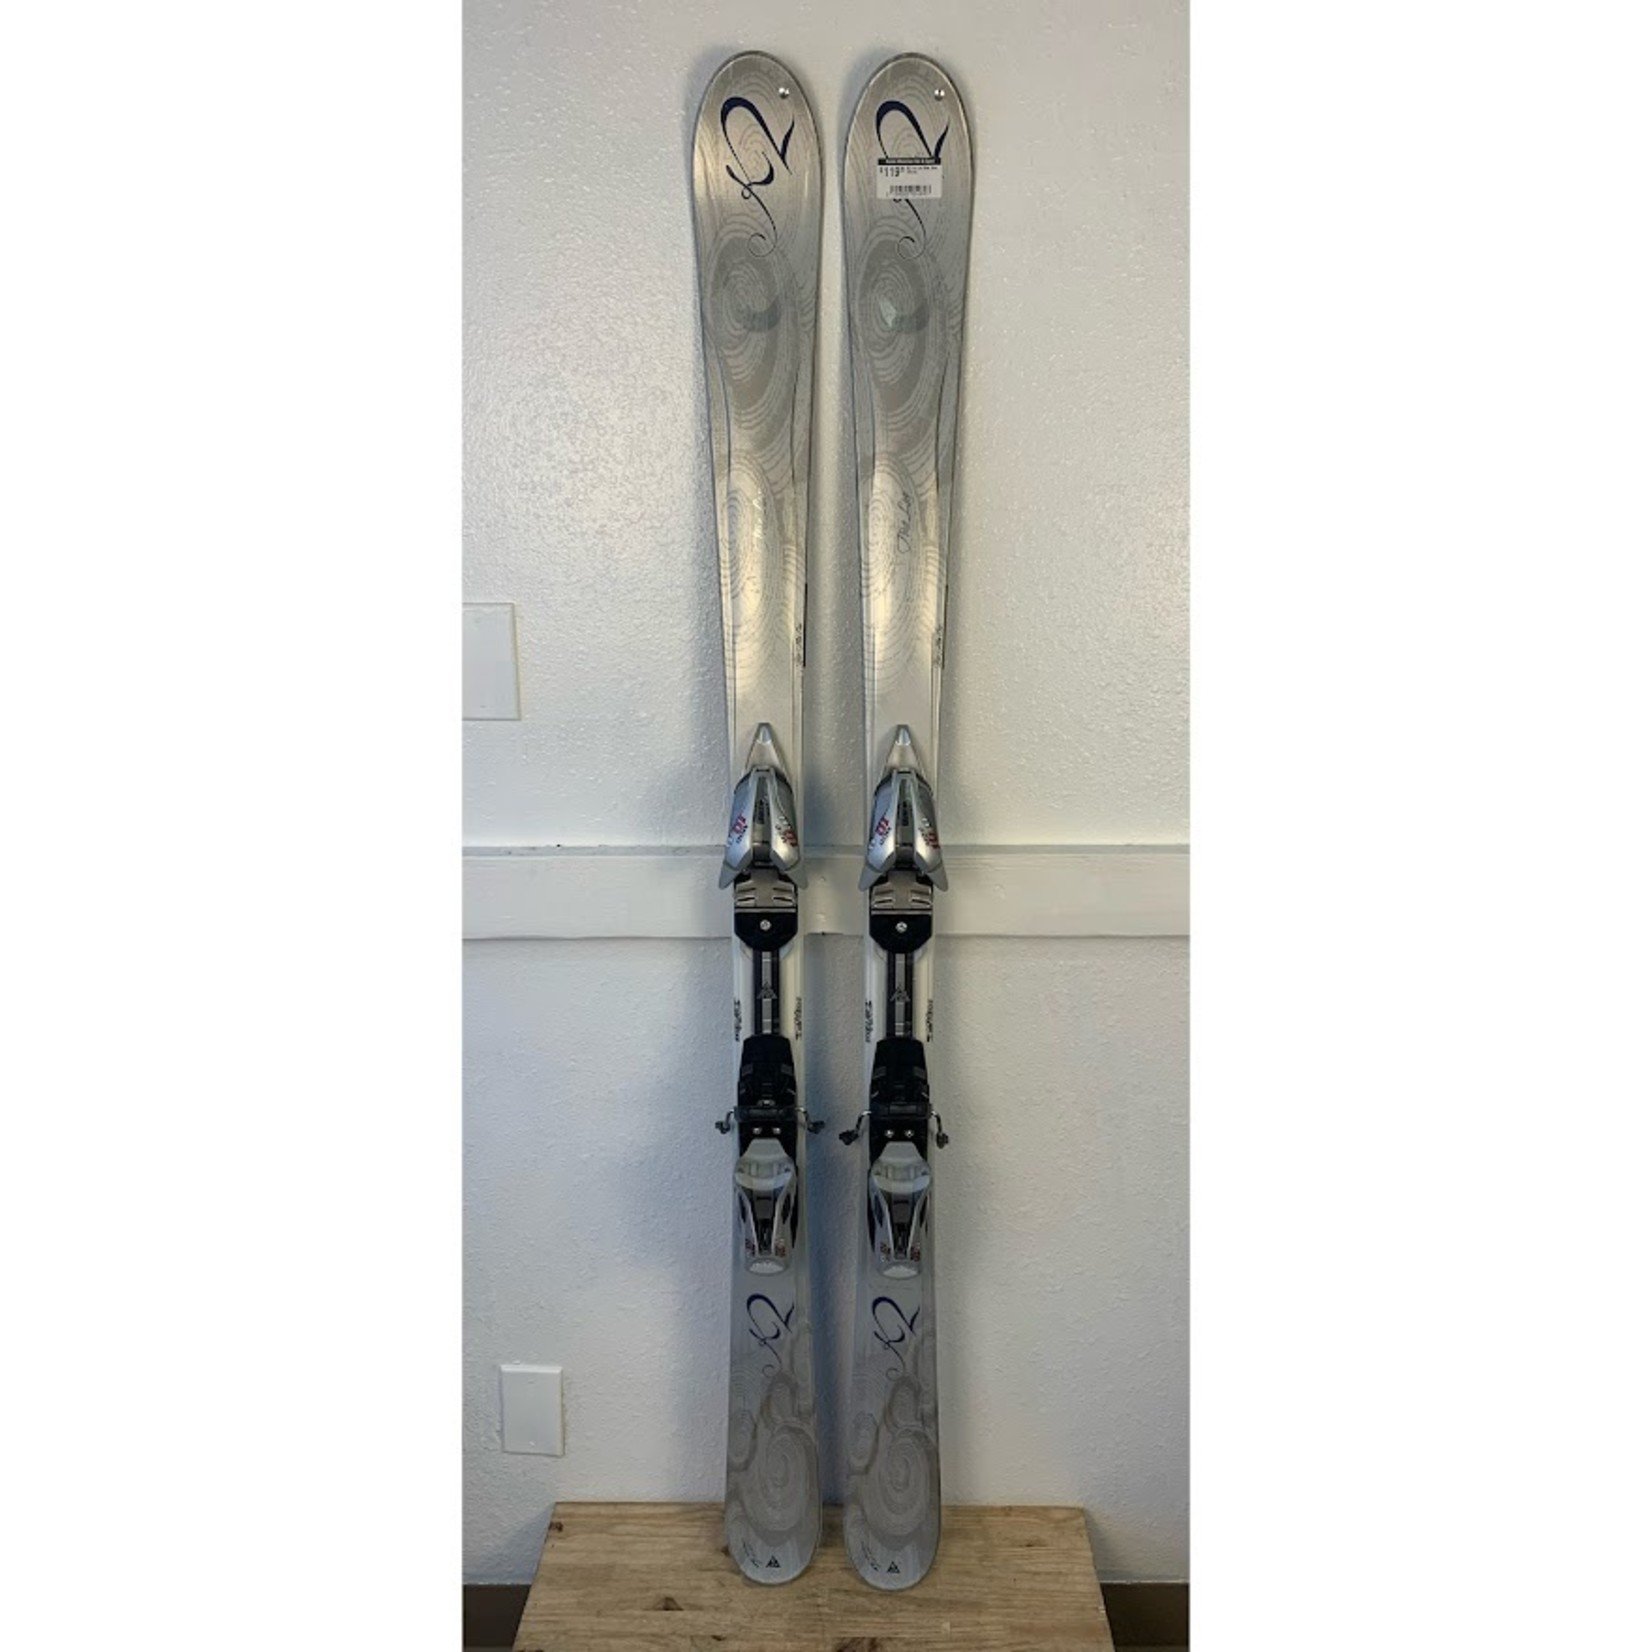 K2 Tru Luv Skis, Size 159 cm.